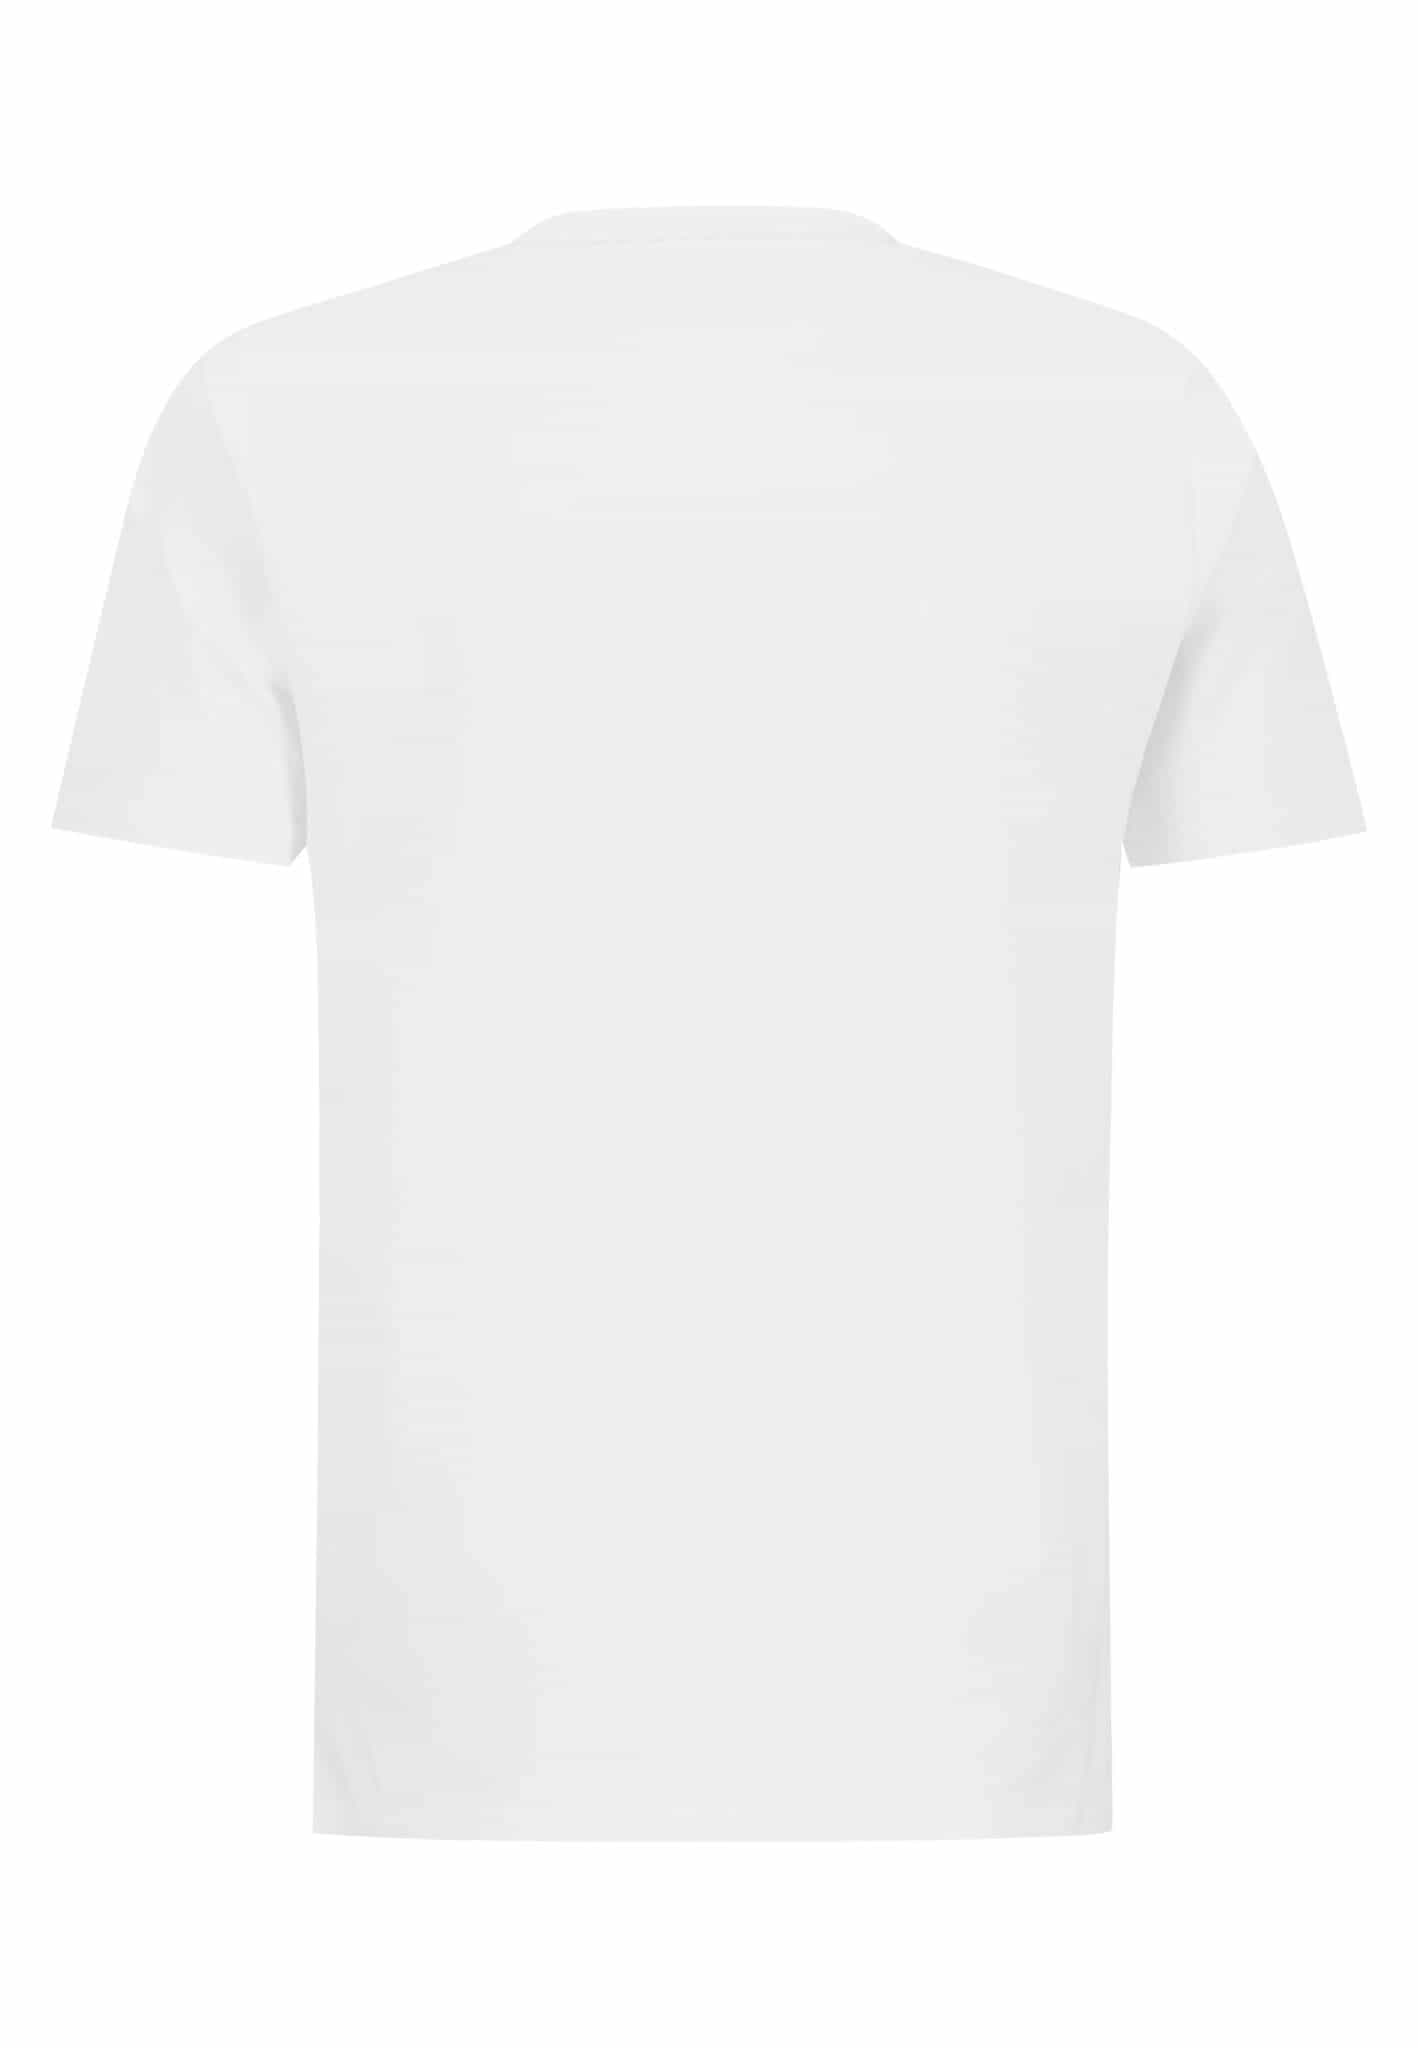 - T-Shirt Frontprint White +UP Fynch Hatton